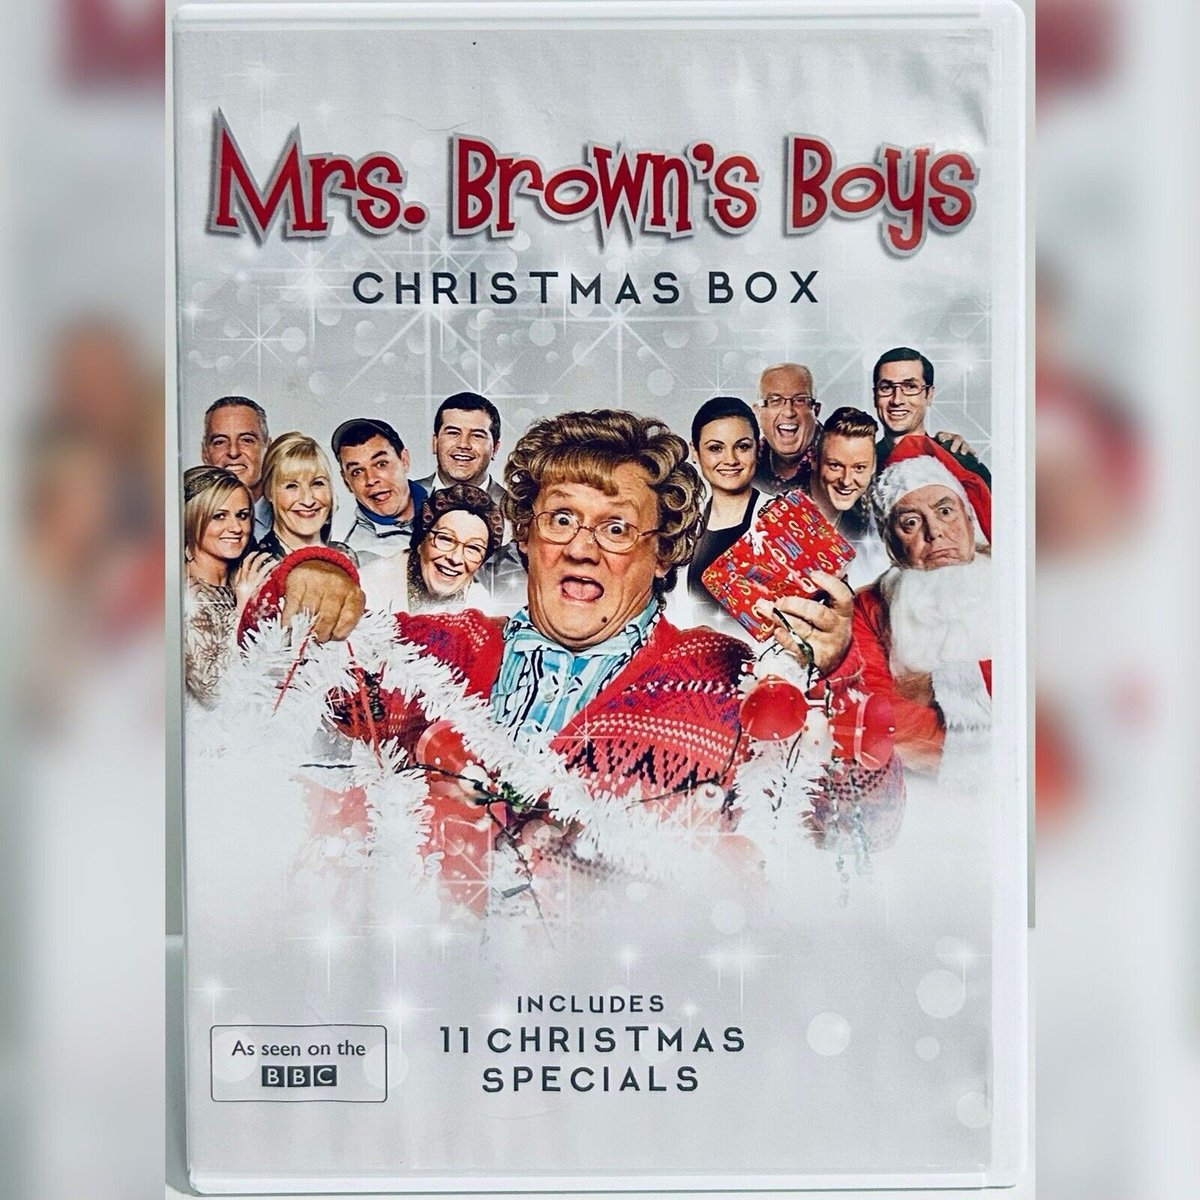 #NewArrival! Mrs. Brown's Boys: Christmas Box DVD 4-Set, 11 Christmas Episodes TV Comedy rareflicksplus.com/product-page/m… #checkitout #DVD #DVDs #PhysicalMedia #Flashback #Christmas #ChristmasMovie #HolidayMovie #FamilyMovie #MRSBrownsBoys #ChristmasBox #ChristmasEpisodes #TV #Comedy